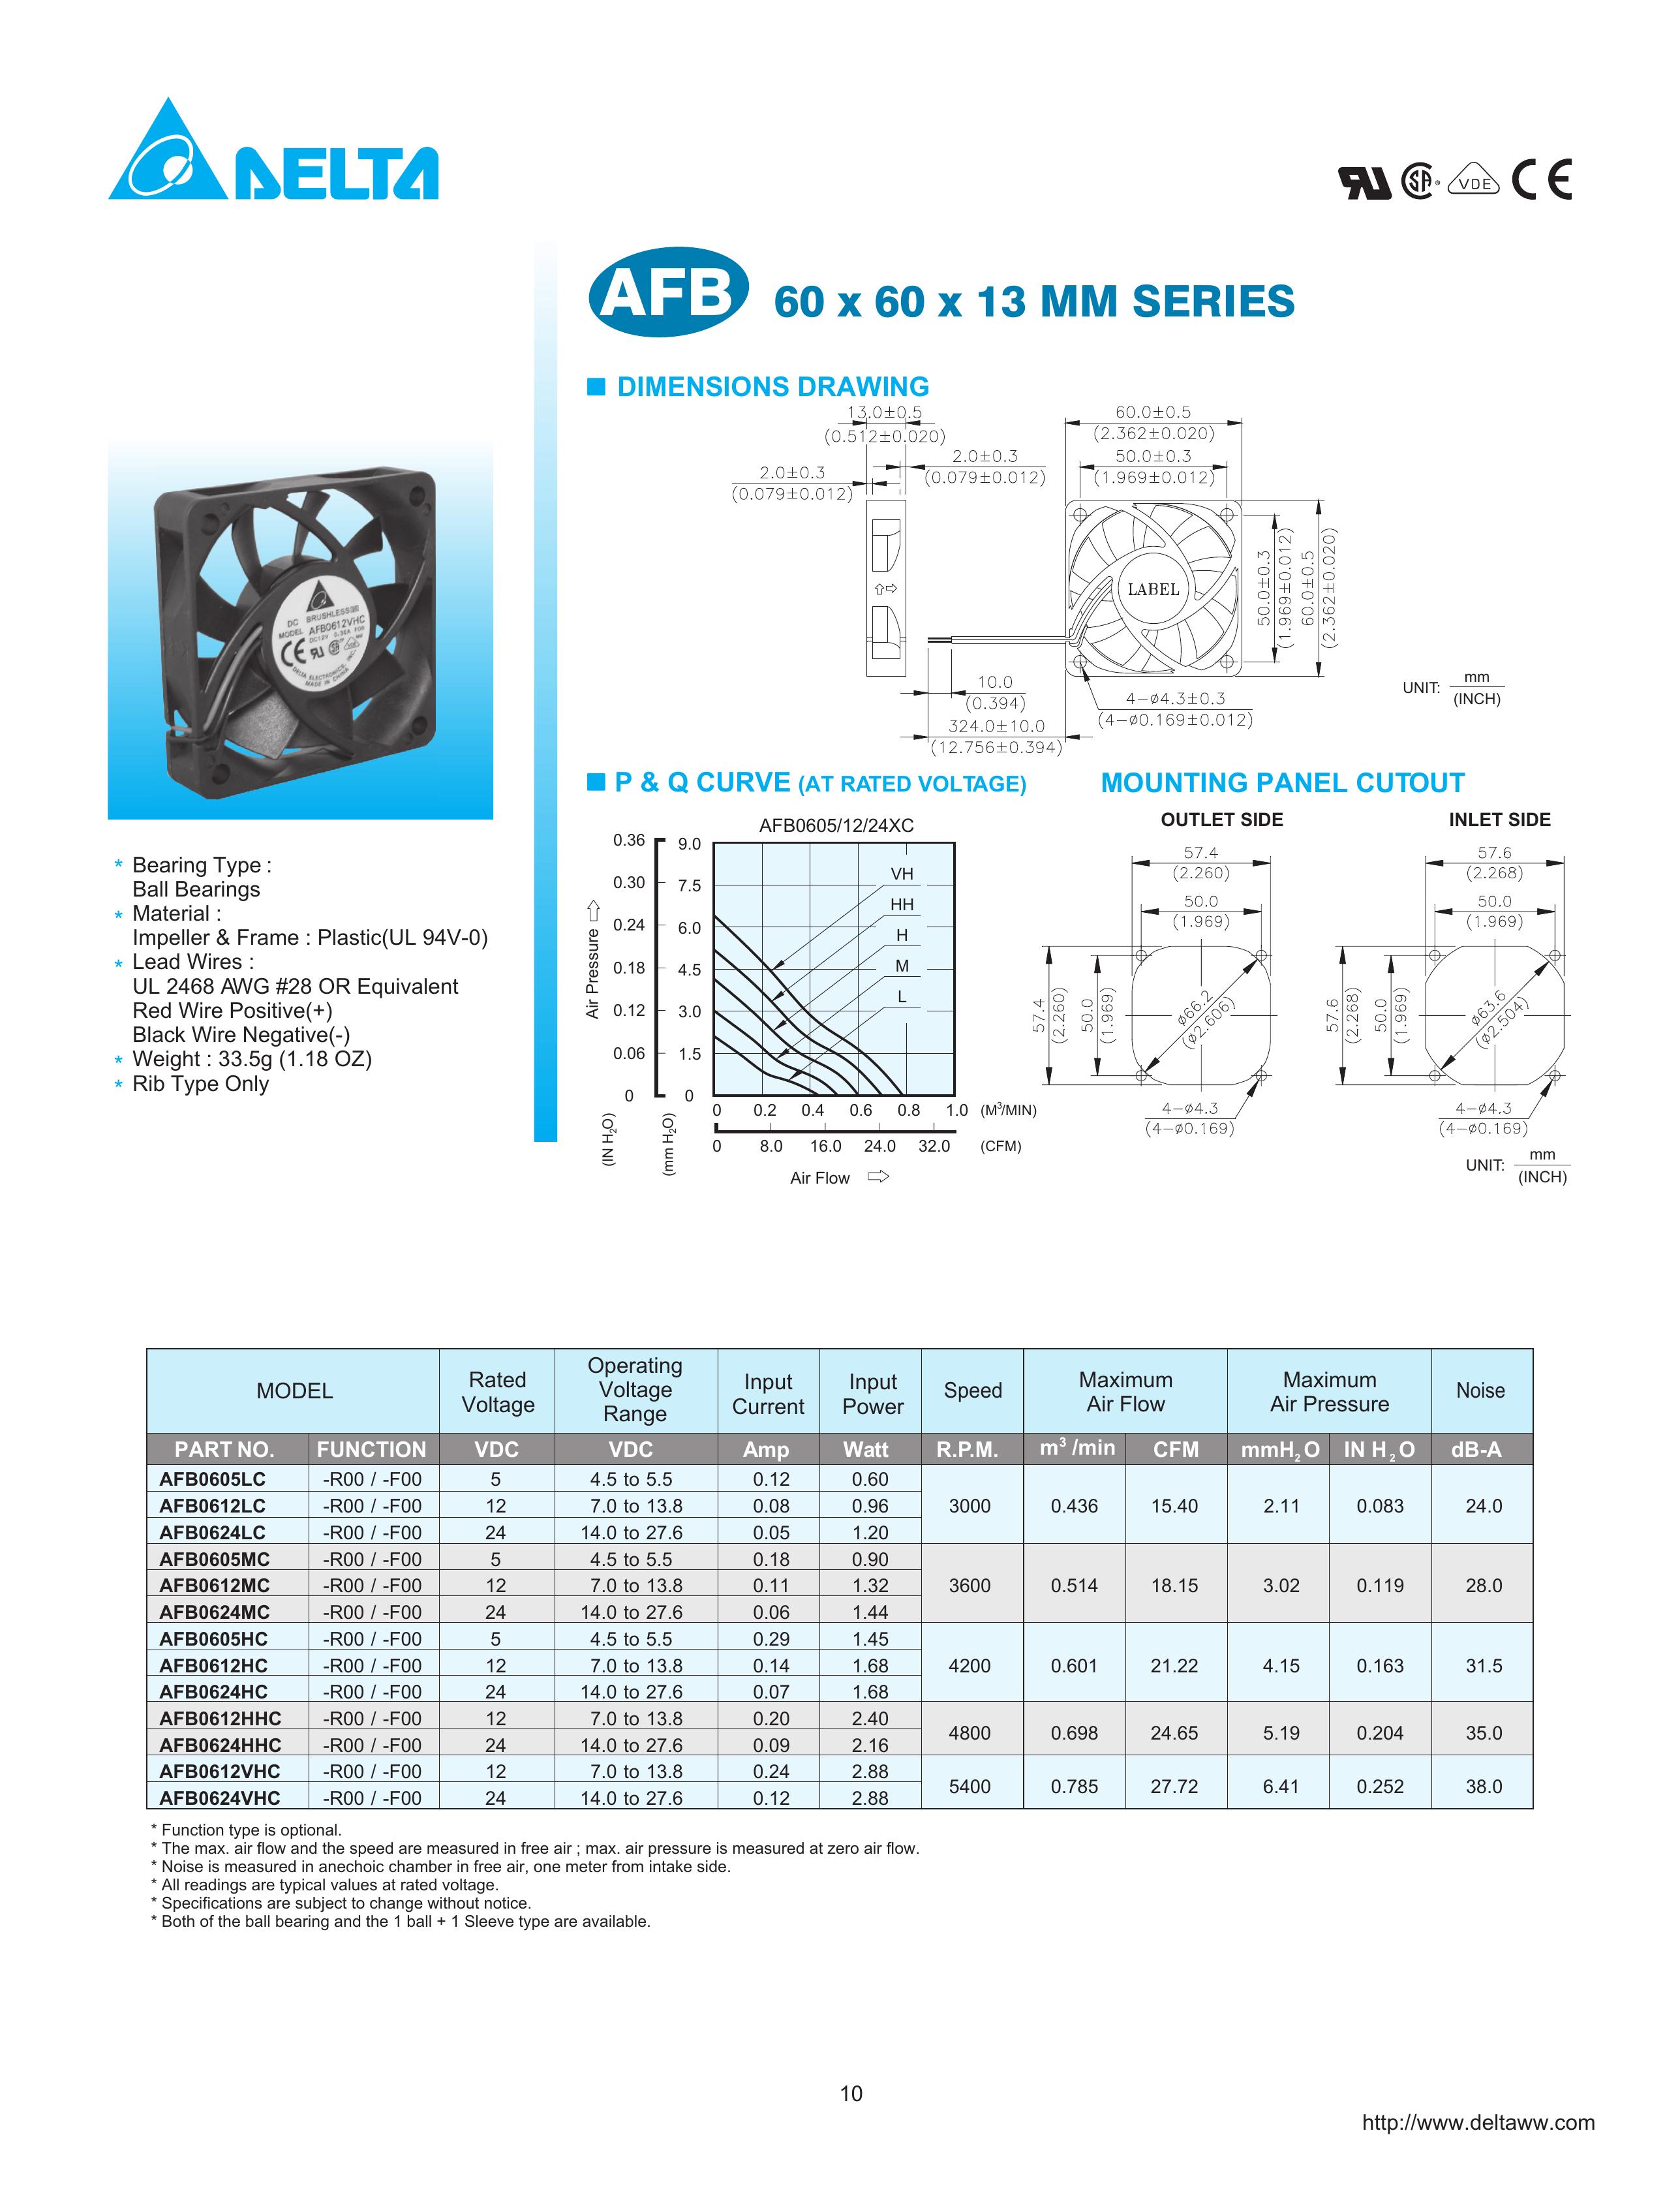 Delta Electronics AFB0605MC Ventilation Hood User Manual